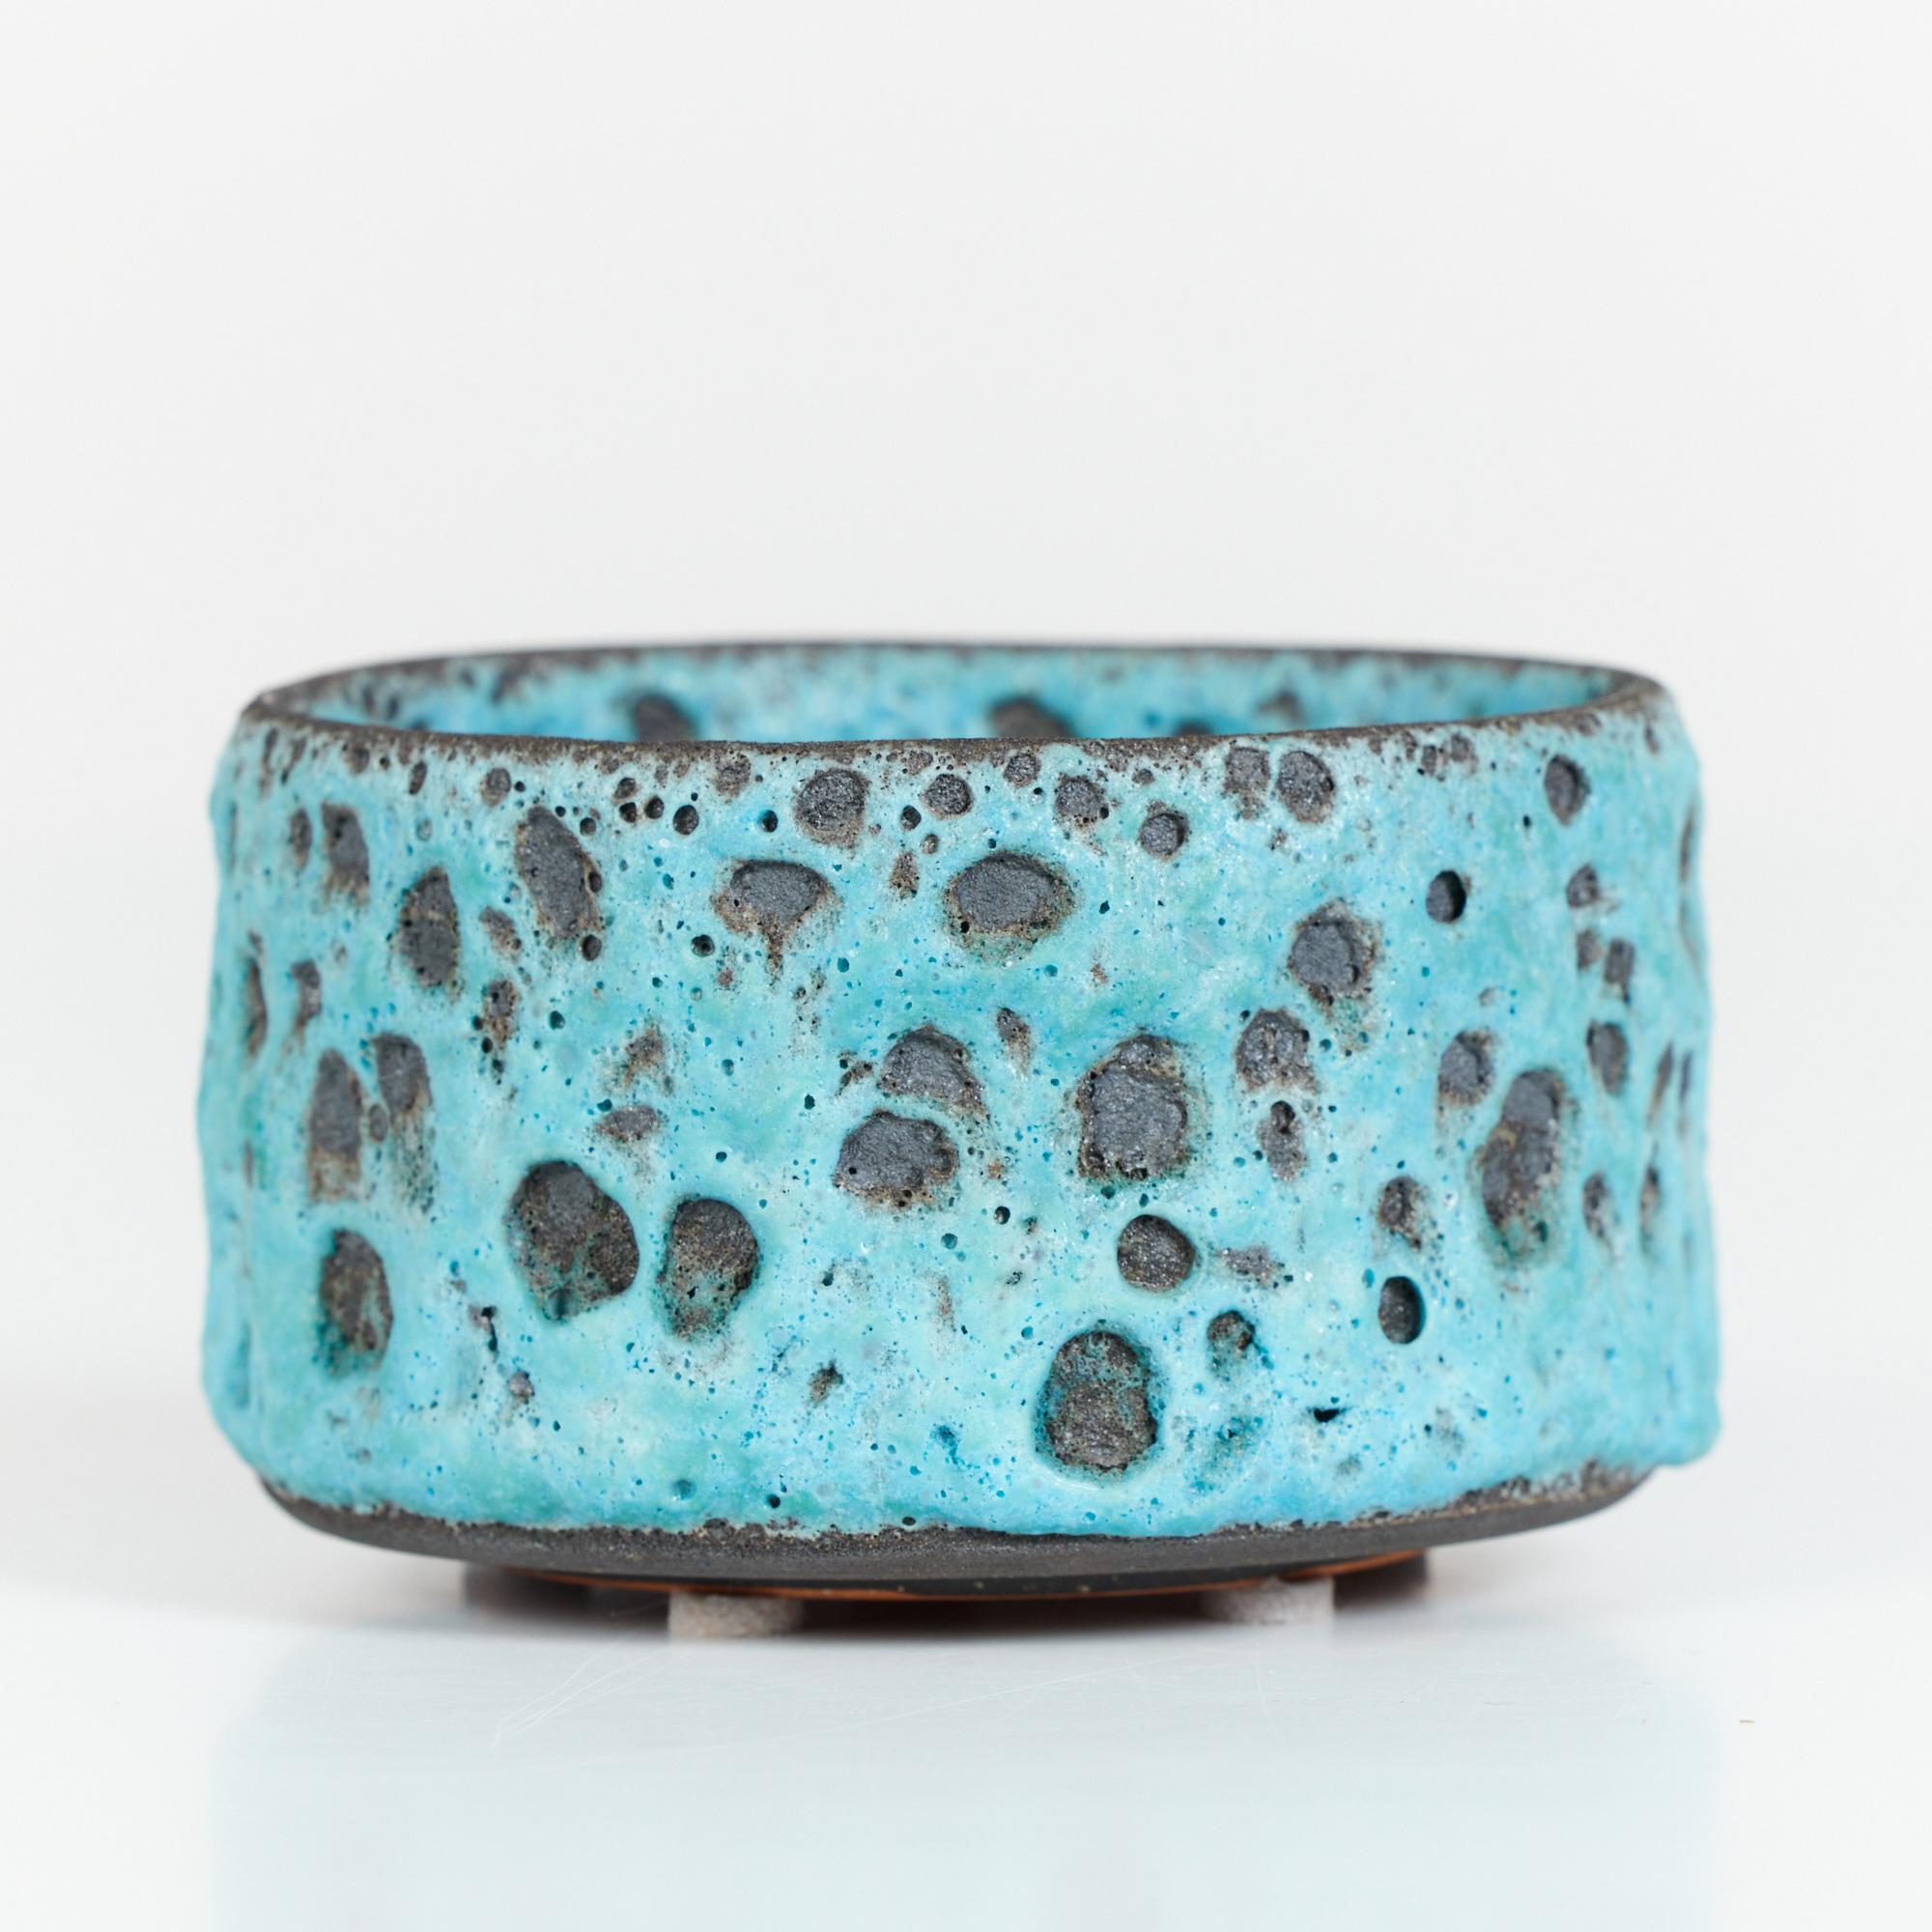 American Blue Chemistry Glazed Ceramic Bowl